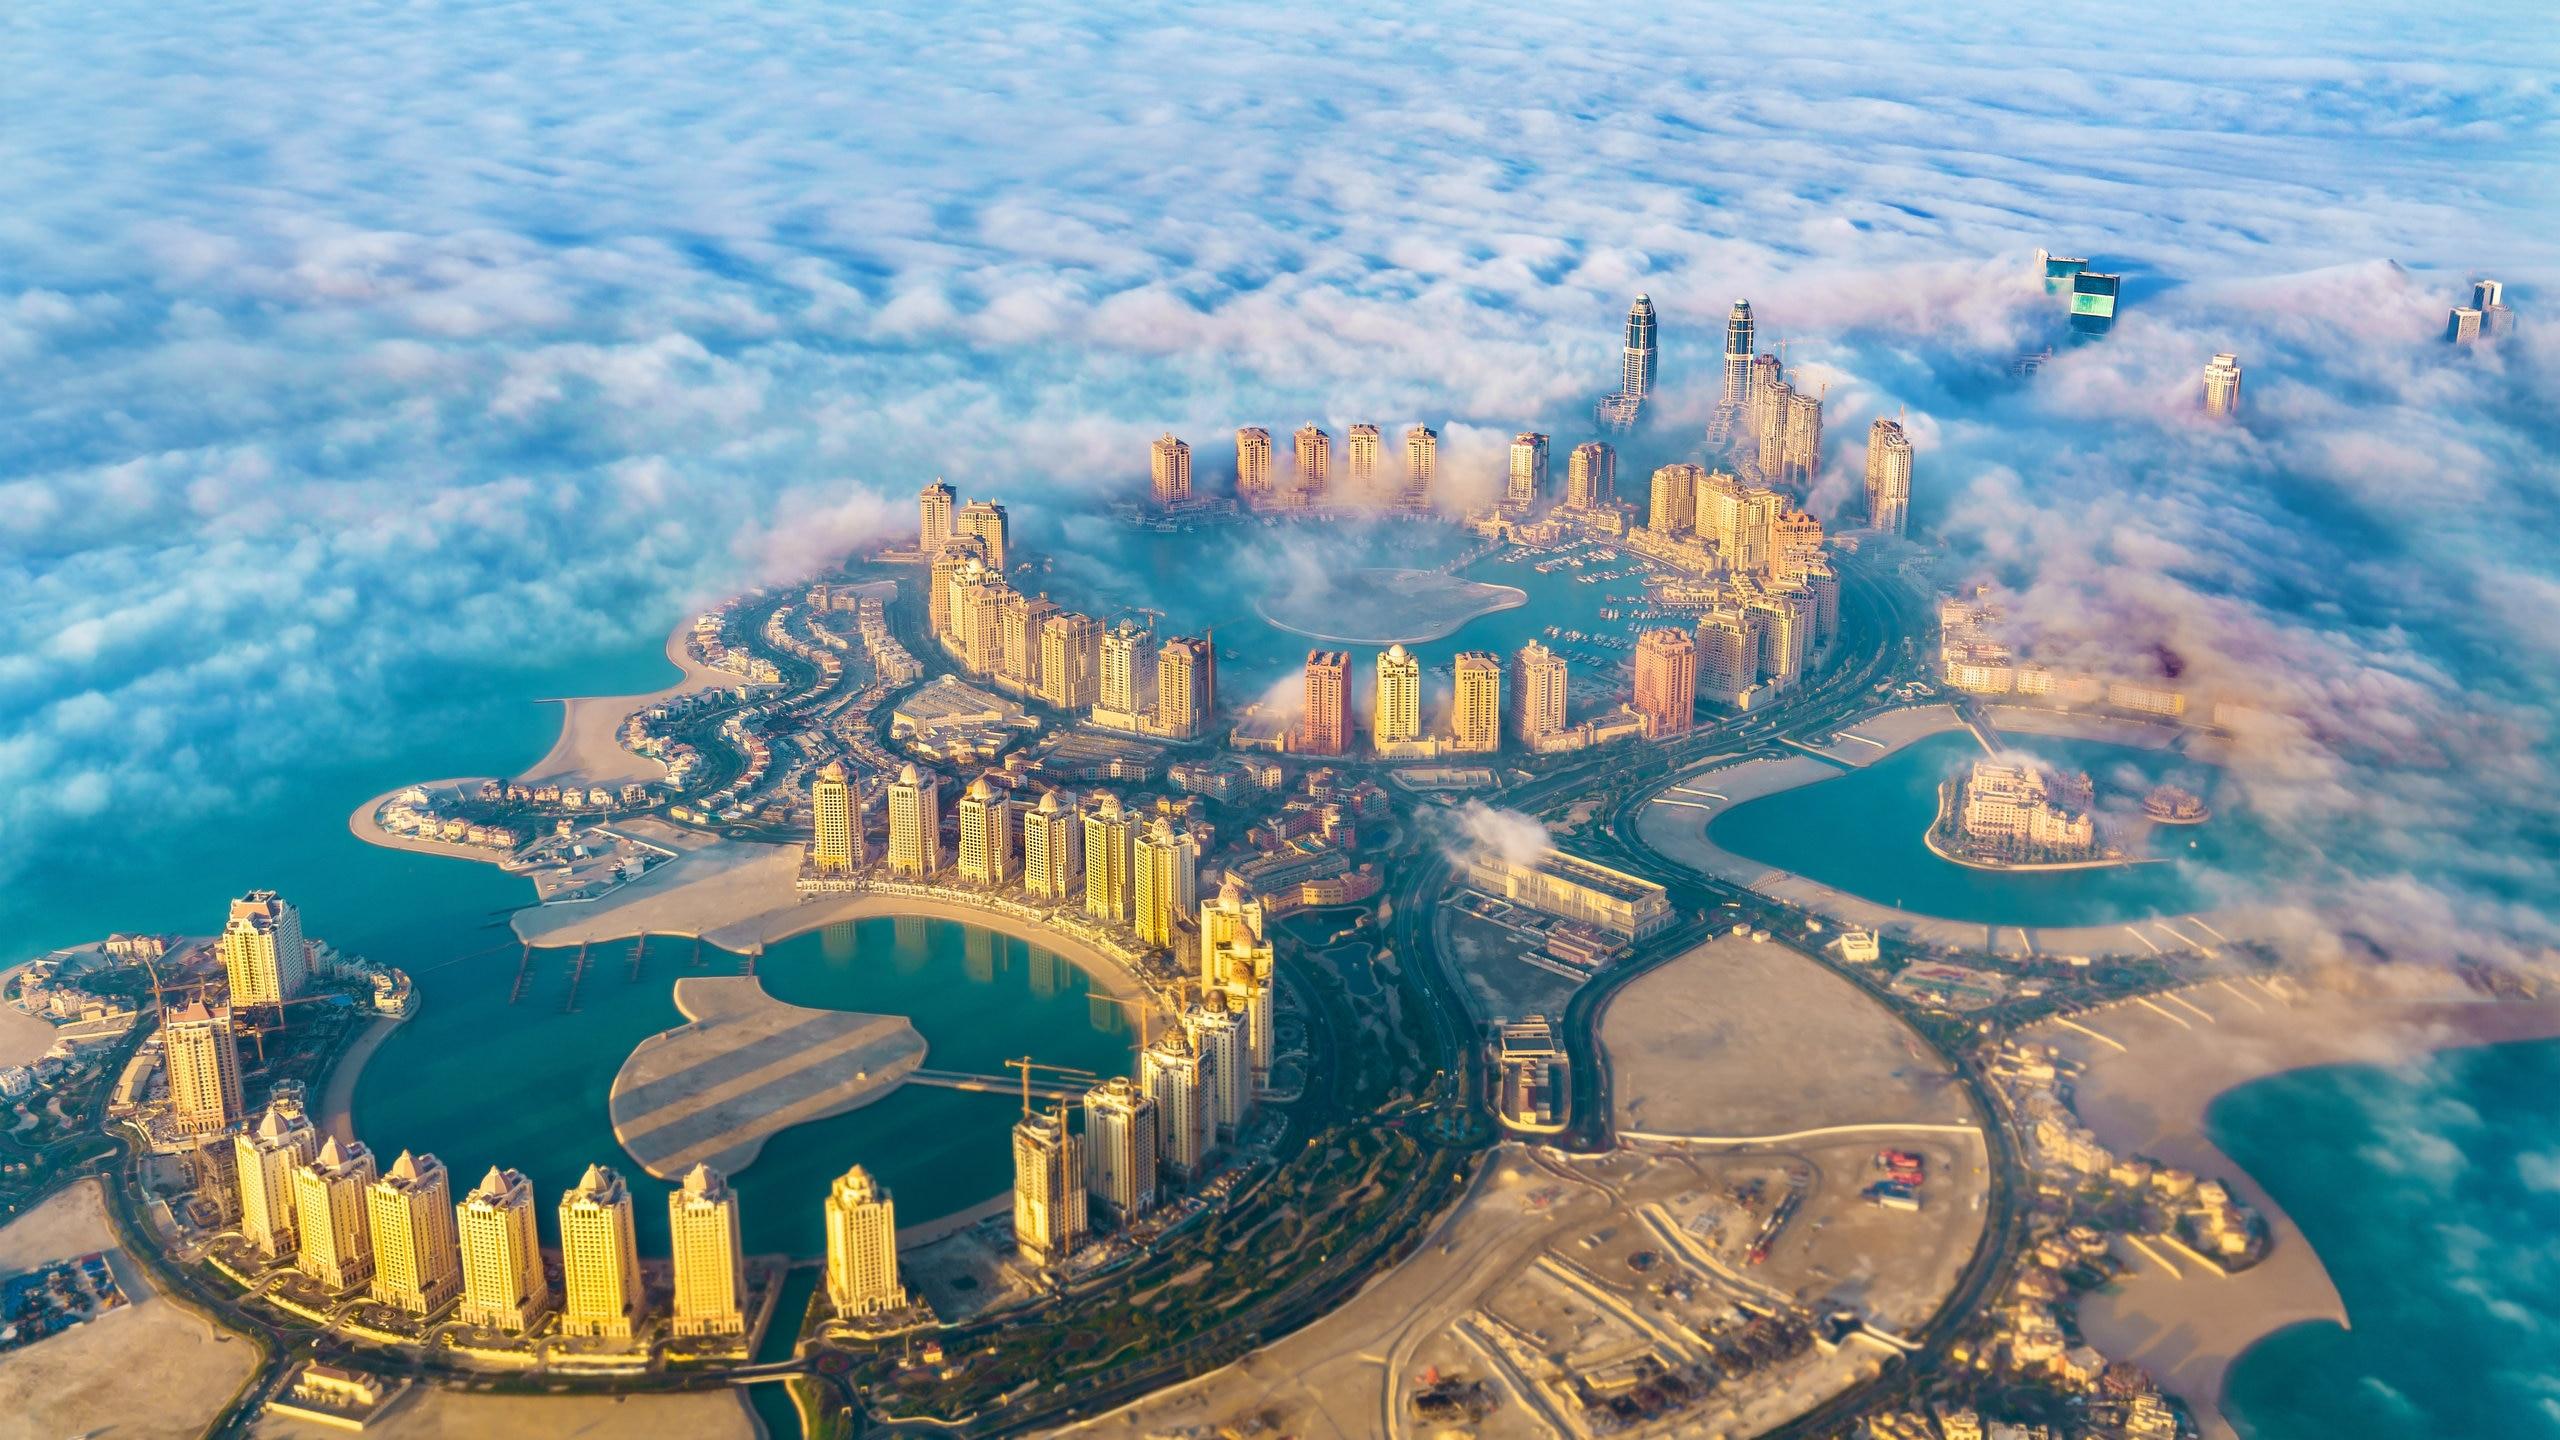 Du lịch Qatar: Tuyệt vời nhất tại Qatar 2023| Expedia.com.vn